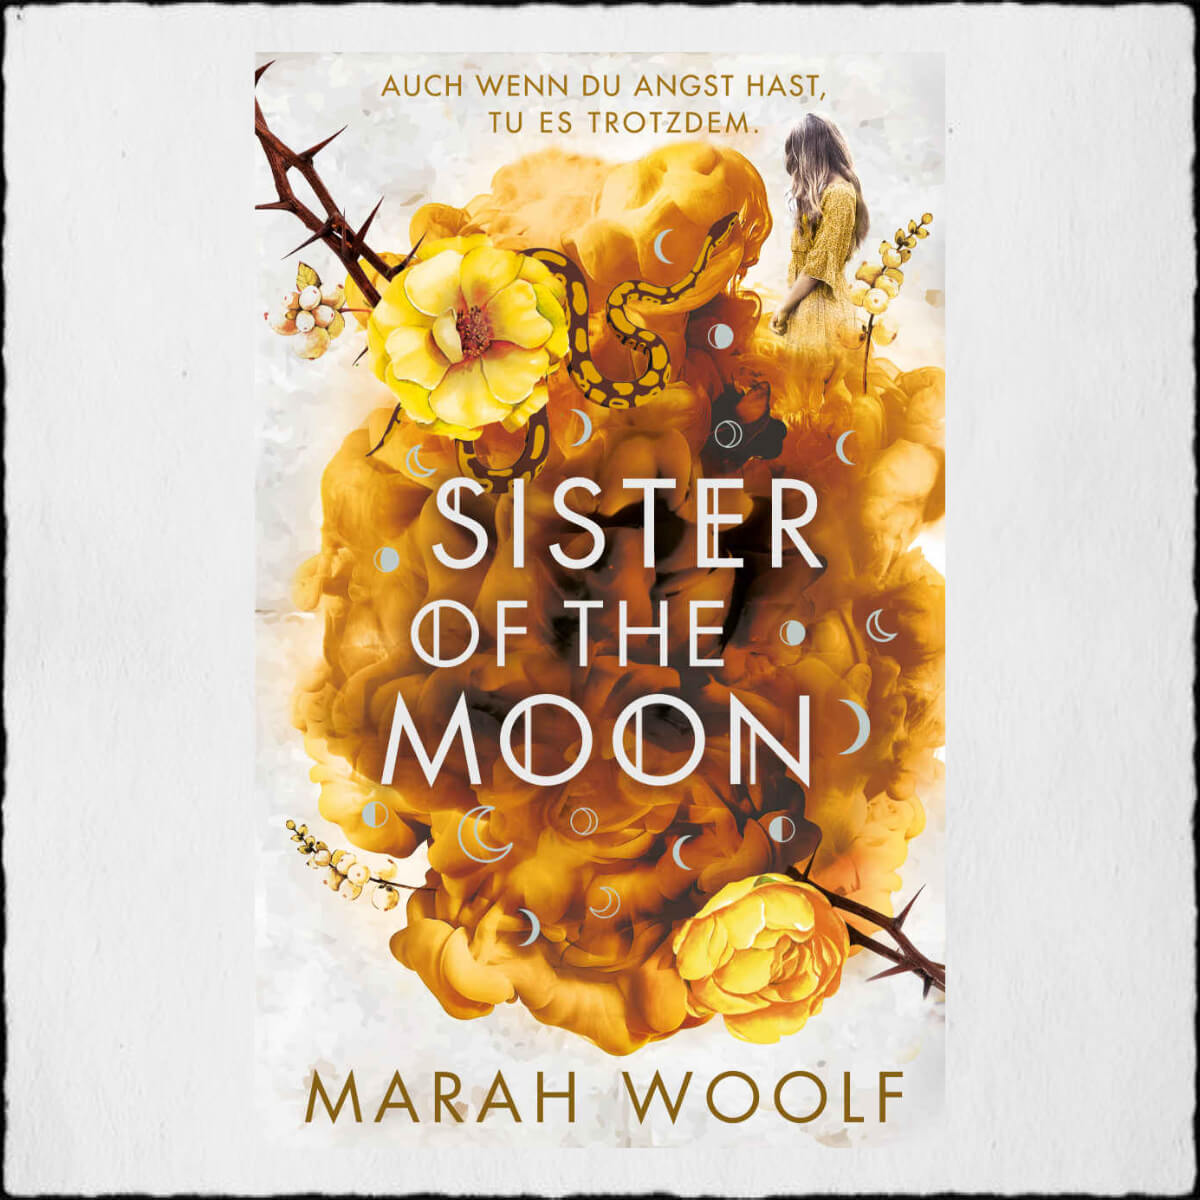 Marah Woolf "Sister of the Moon - HexenSchwesternSaga 2" © 2020 Marah Woolf in Selbstpublikation